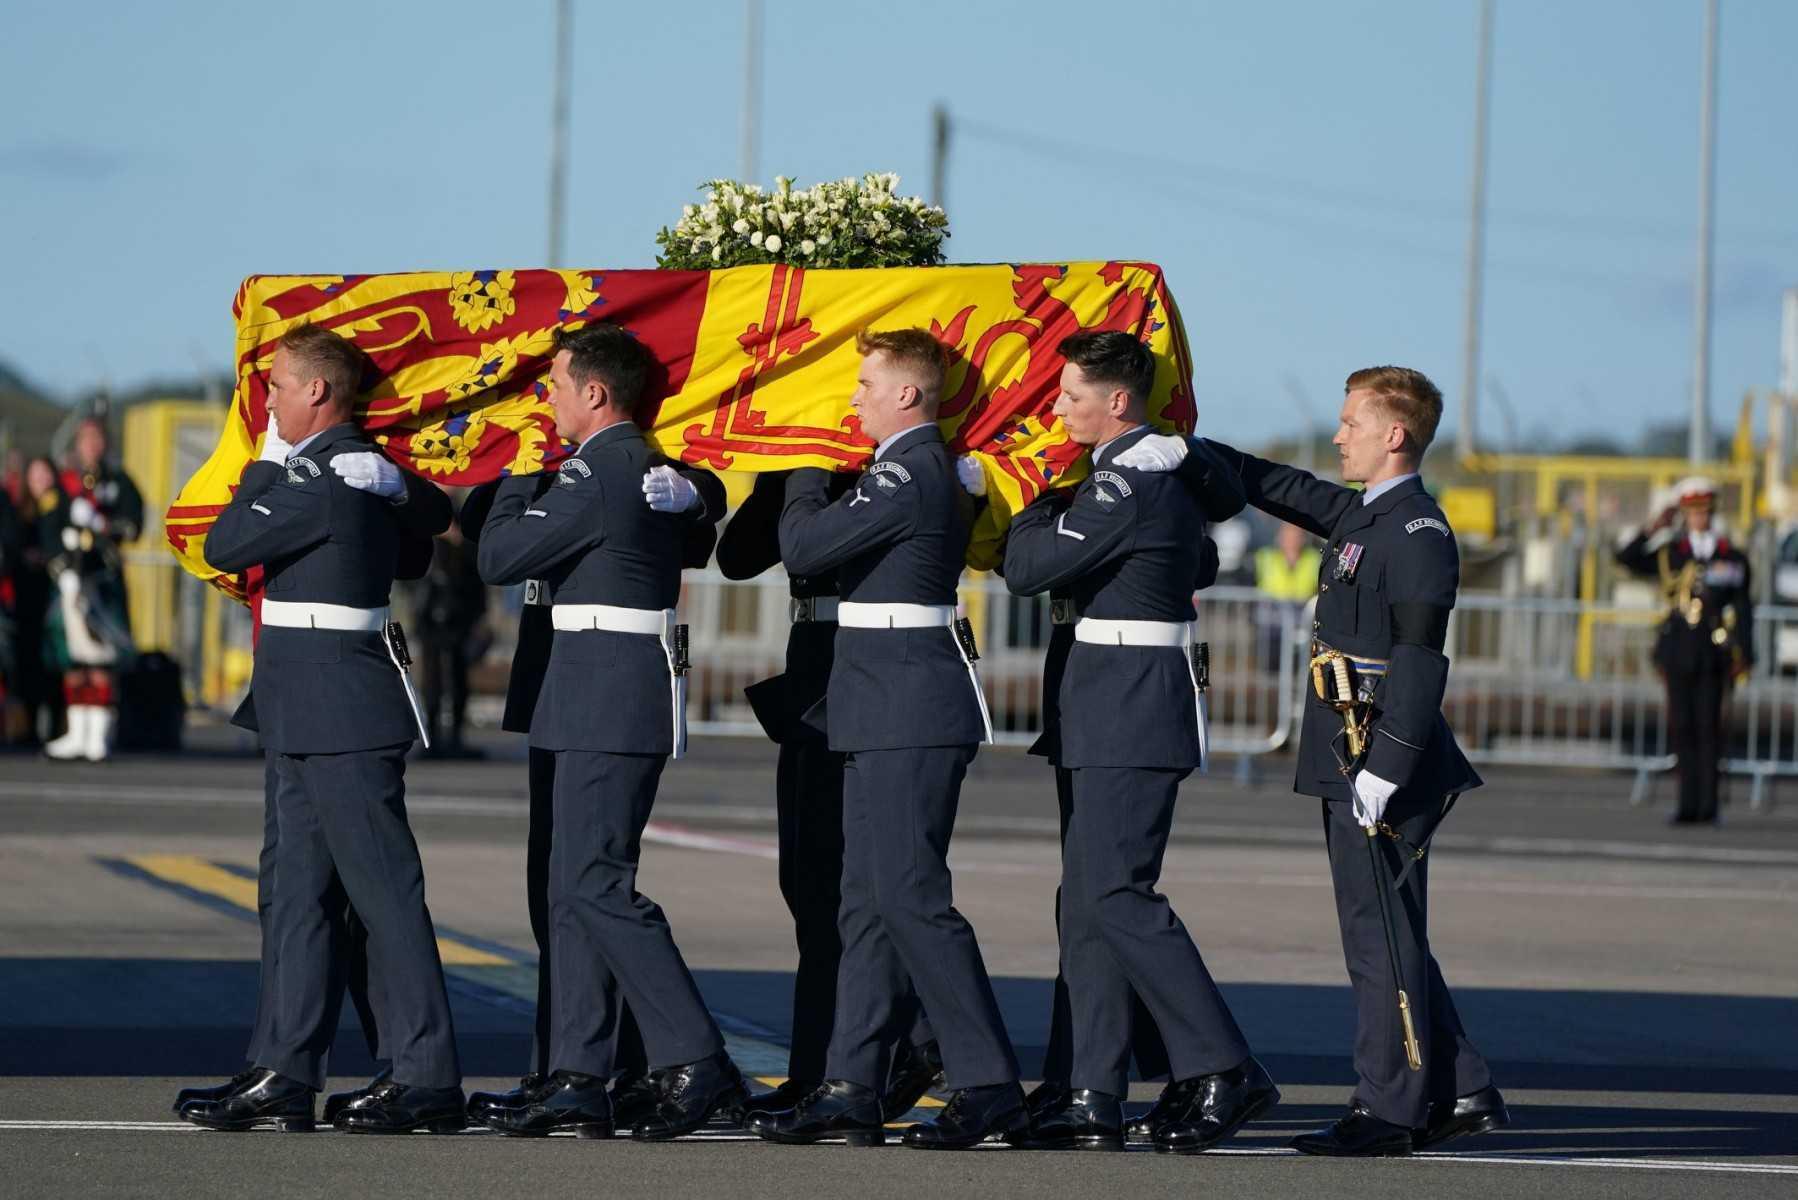 Keranda mengandungi jasad Ratu Elizabeth diangkat oleh tentera udara UK di Lapangan Terbang Ediburg pada 13 September lalu. Isitiadat pemakaman mendiang dijalankan hari ini di London. Gambar: AFP 